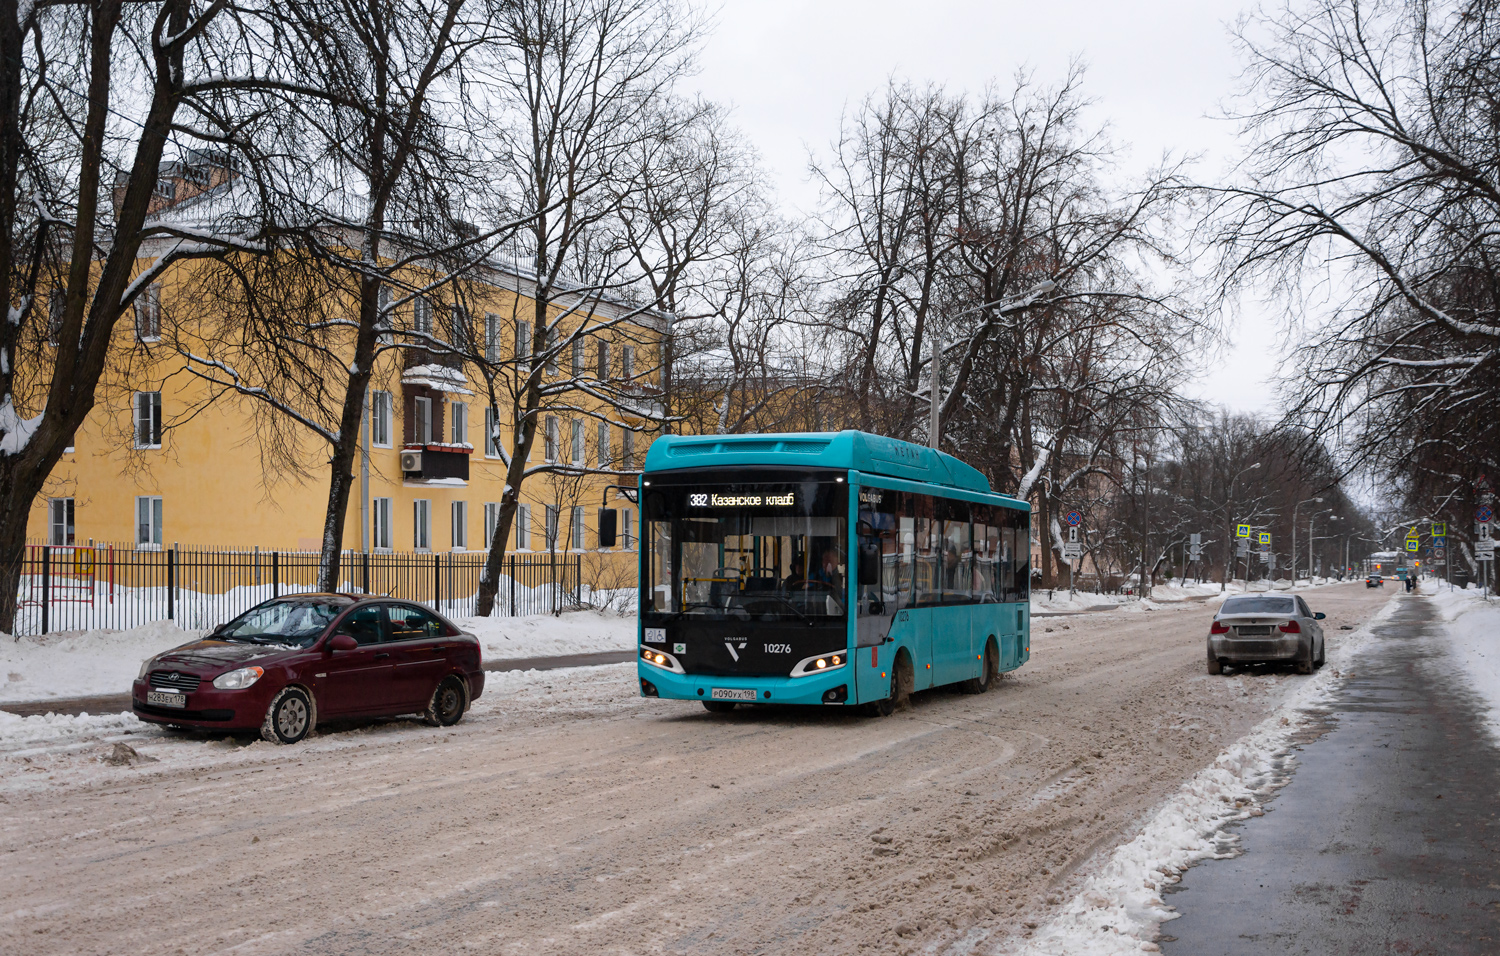 Saint-Pétersbourg, Volgabus-4298.G4 (CNG) # 10276